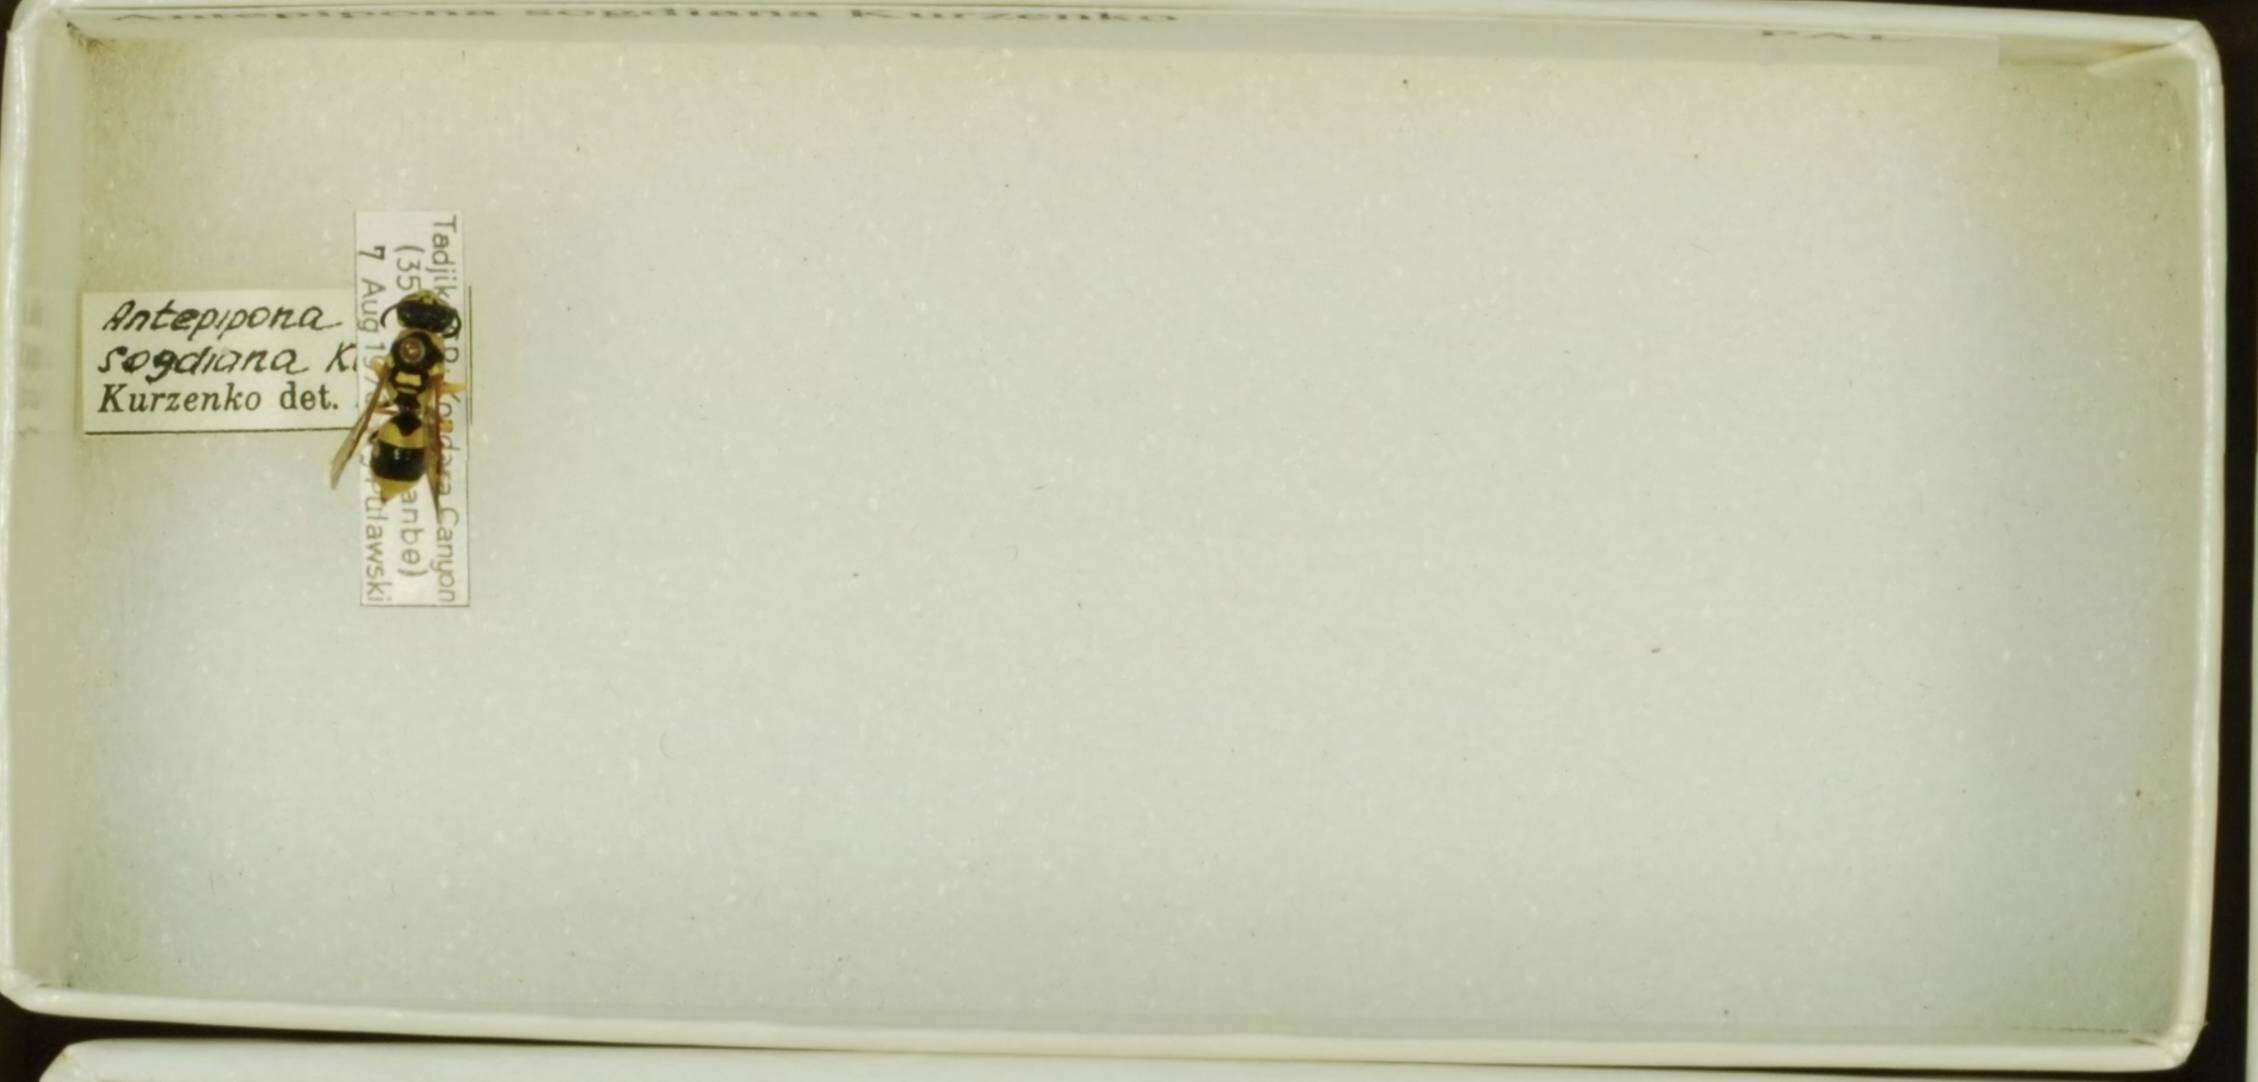 Image of Antepipona de Saussure 1855